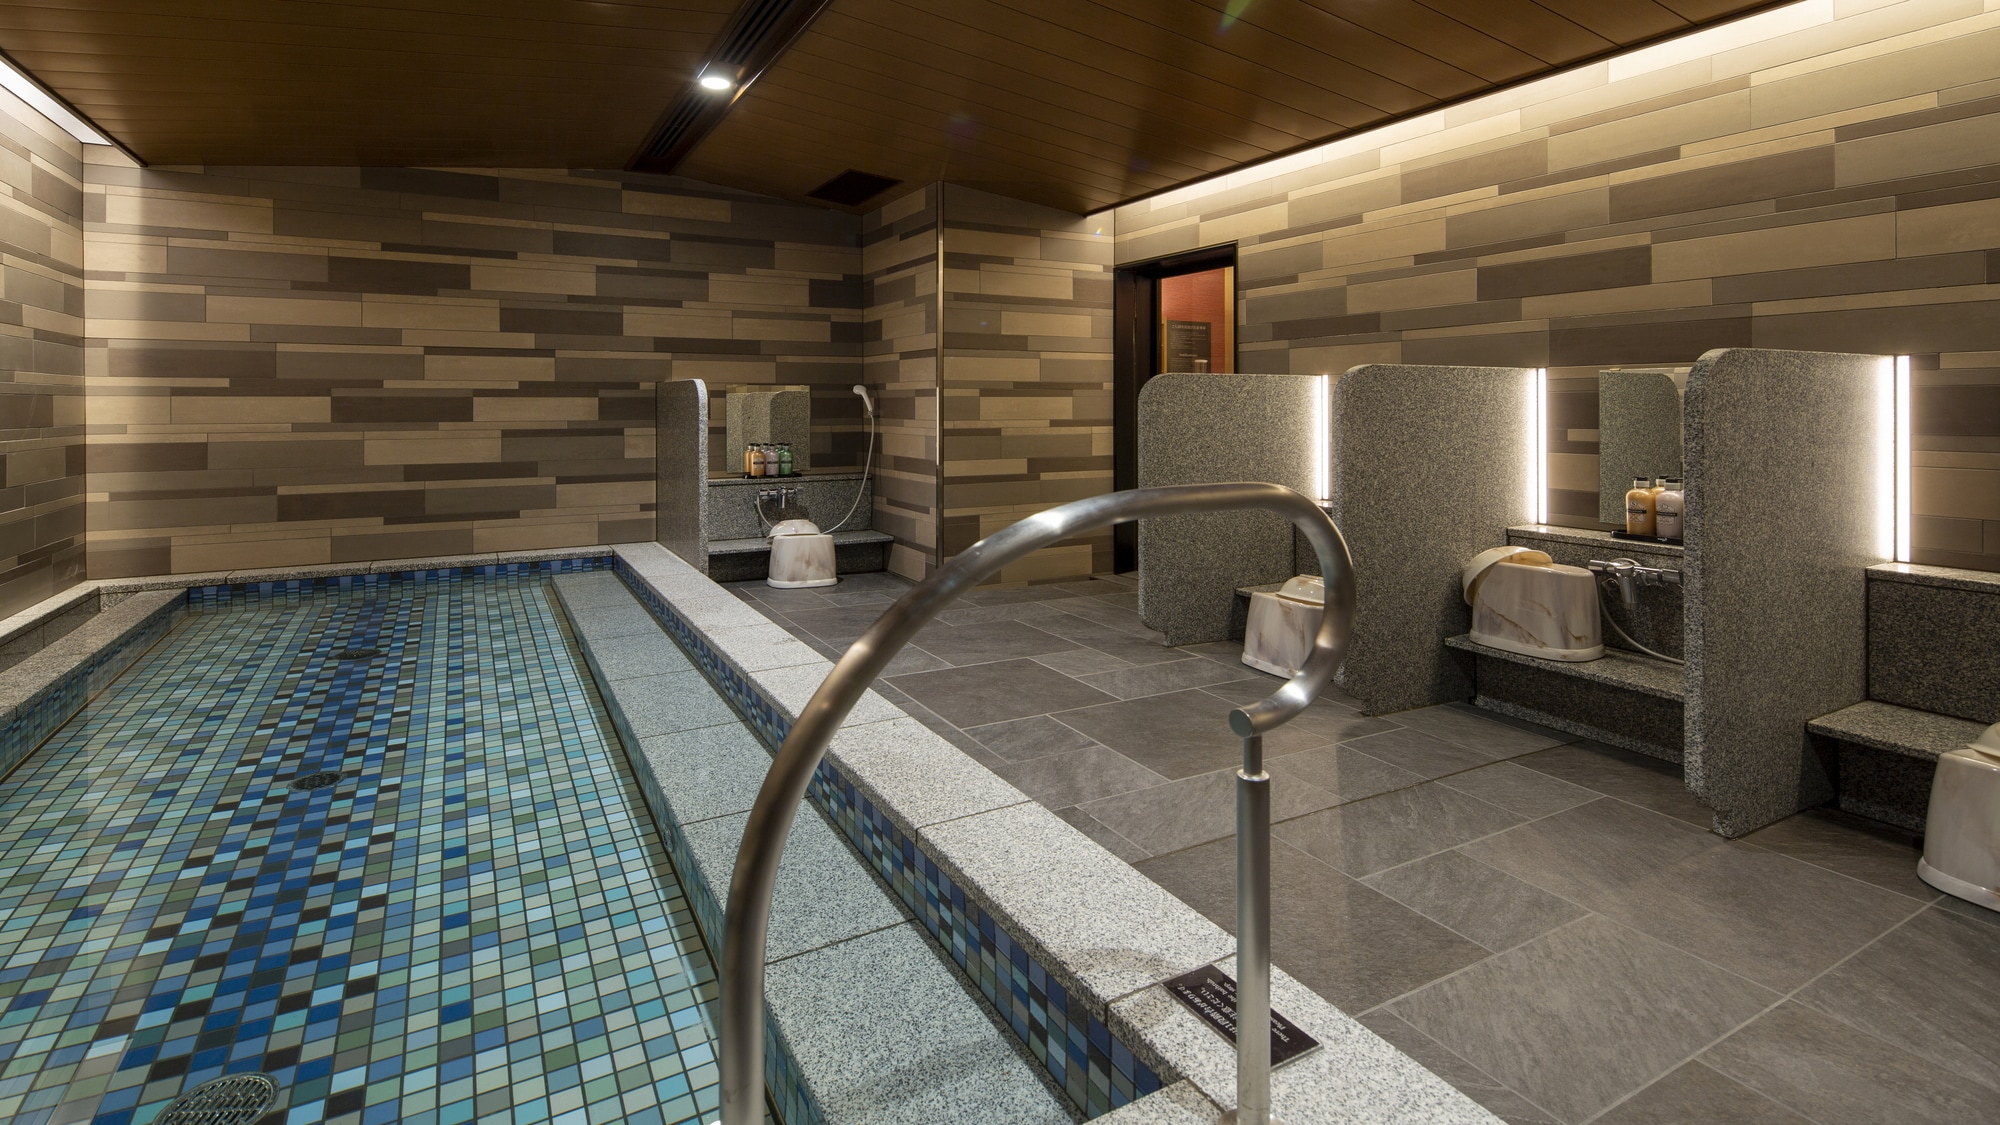 [Facilities in the building] "Trinite", a hot bath facility with a sauna